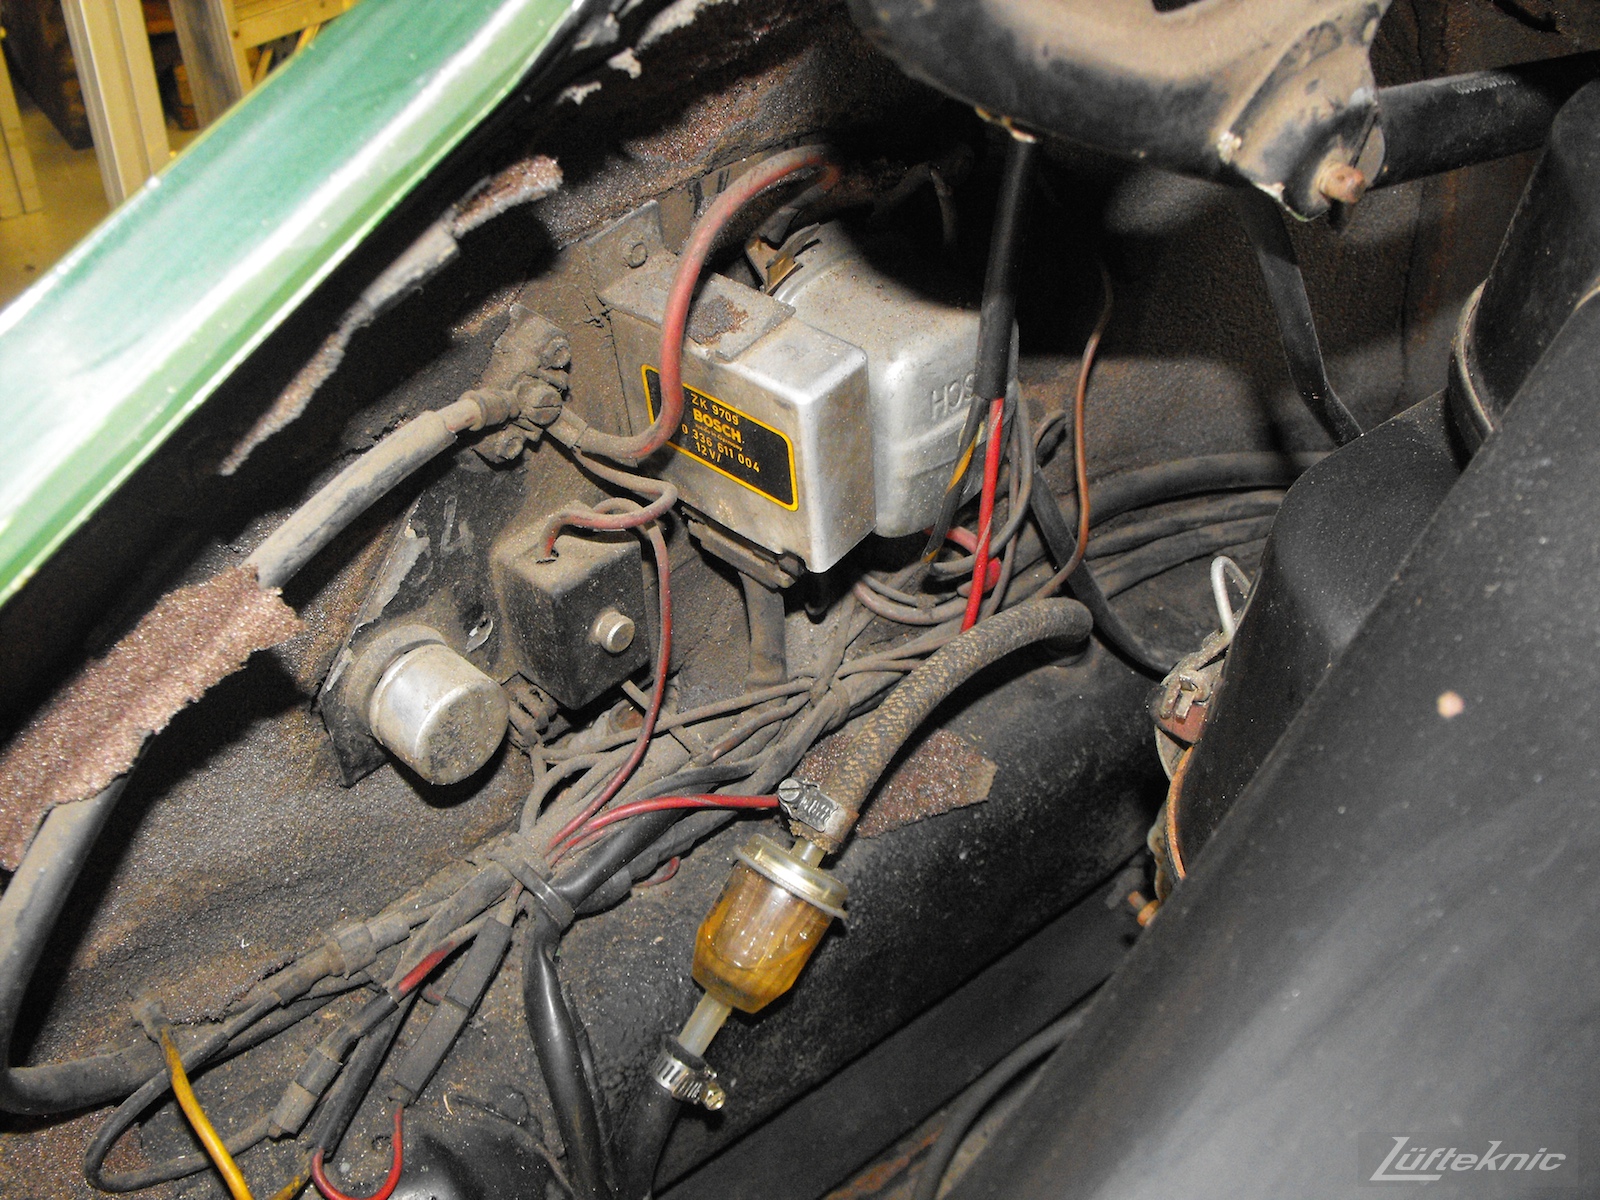 Dirty components of an Irish Green Porsche 912 undergoing restoration at Lufteknic.